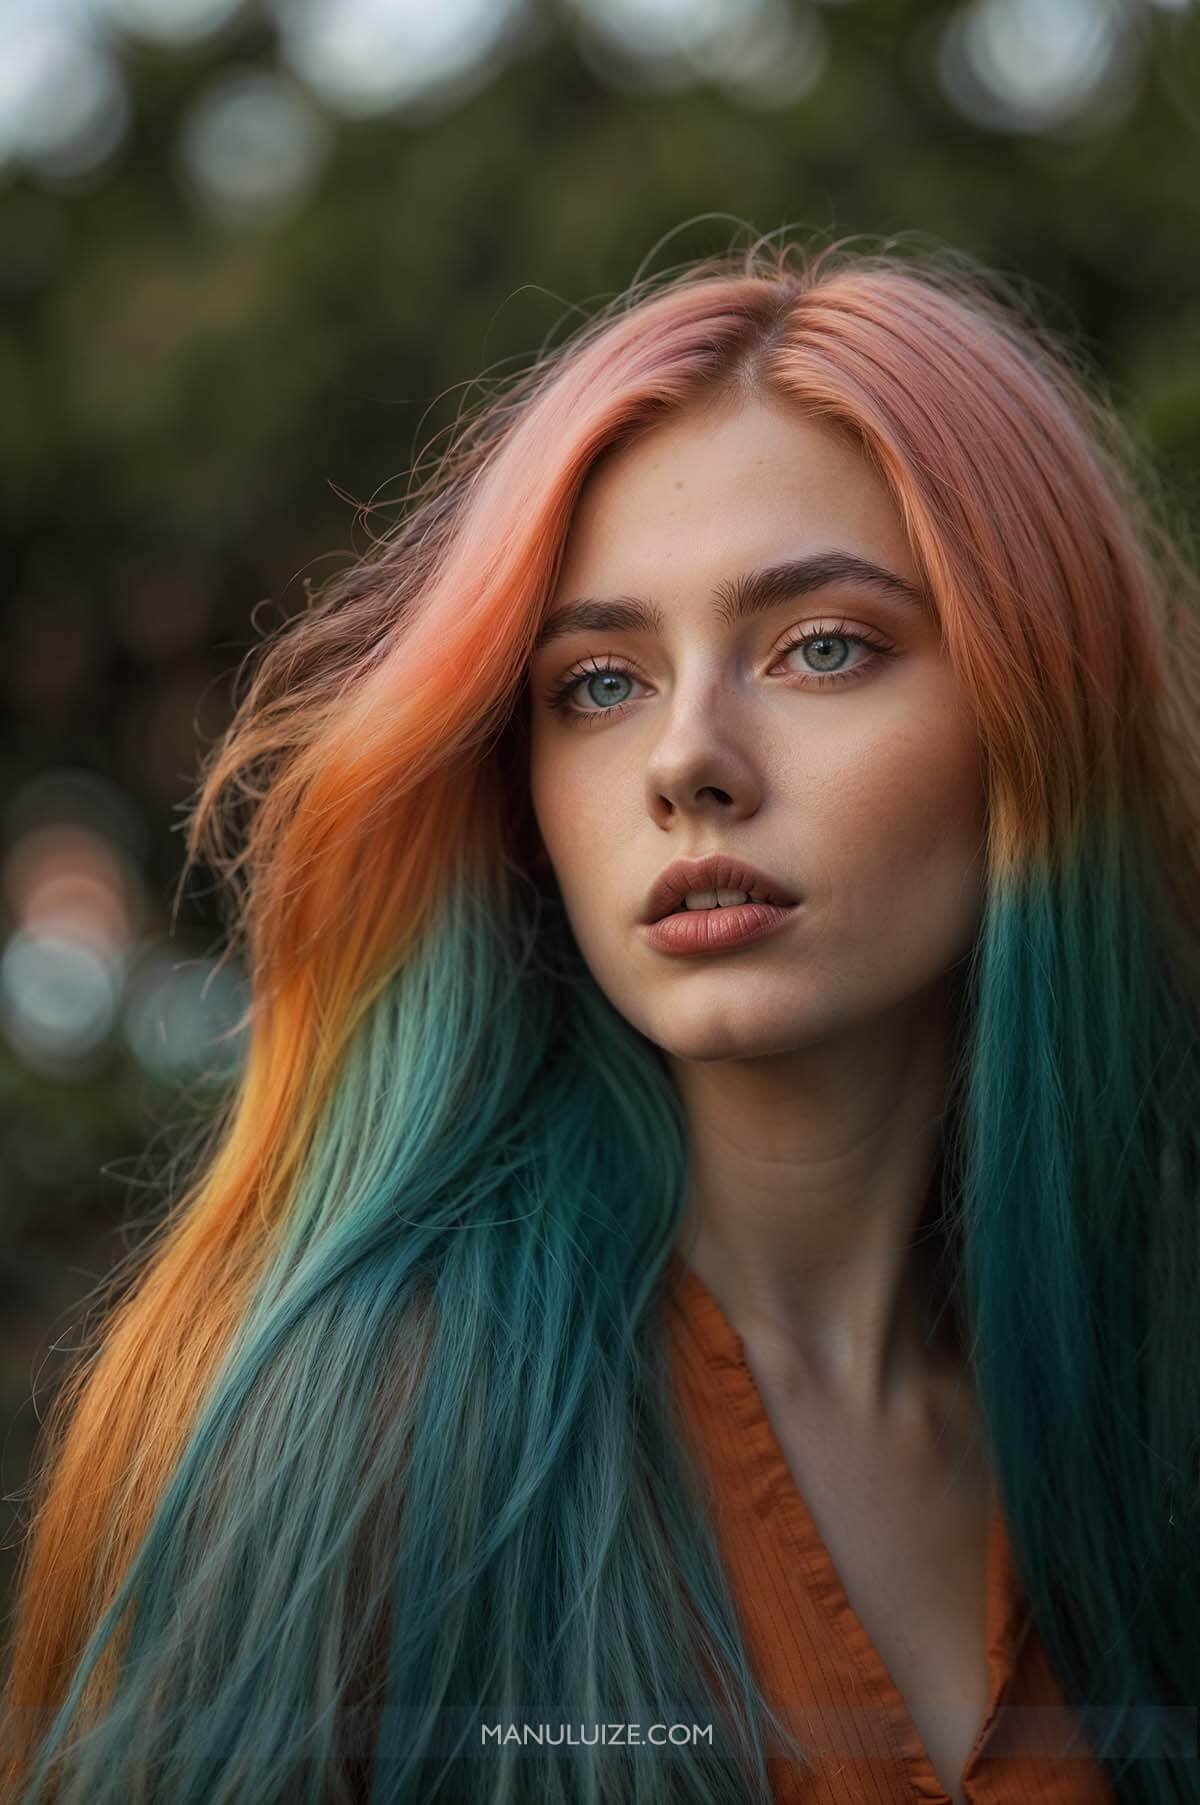 Colorful hair